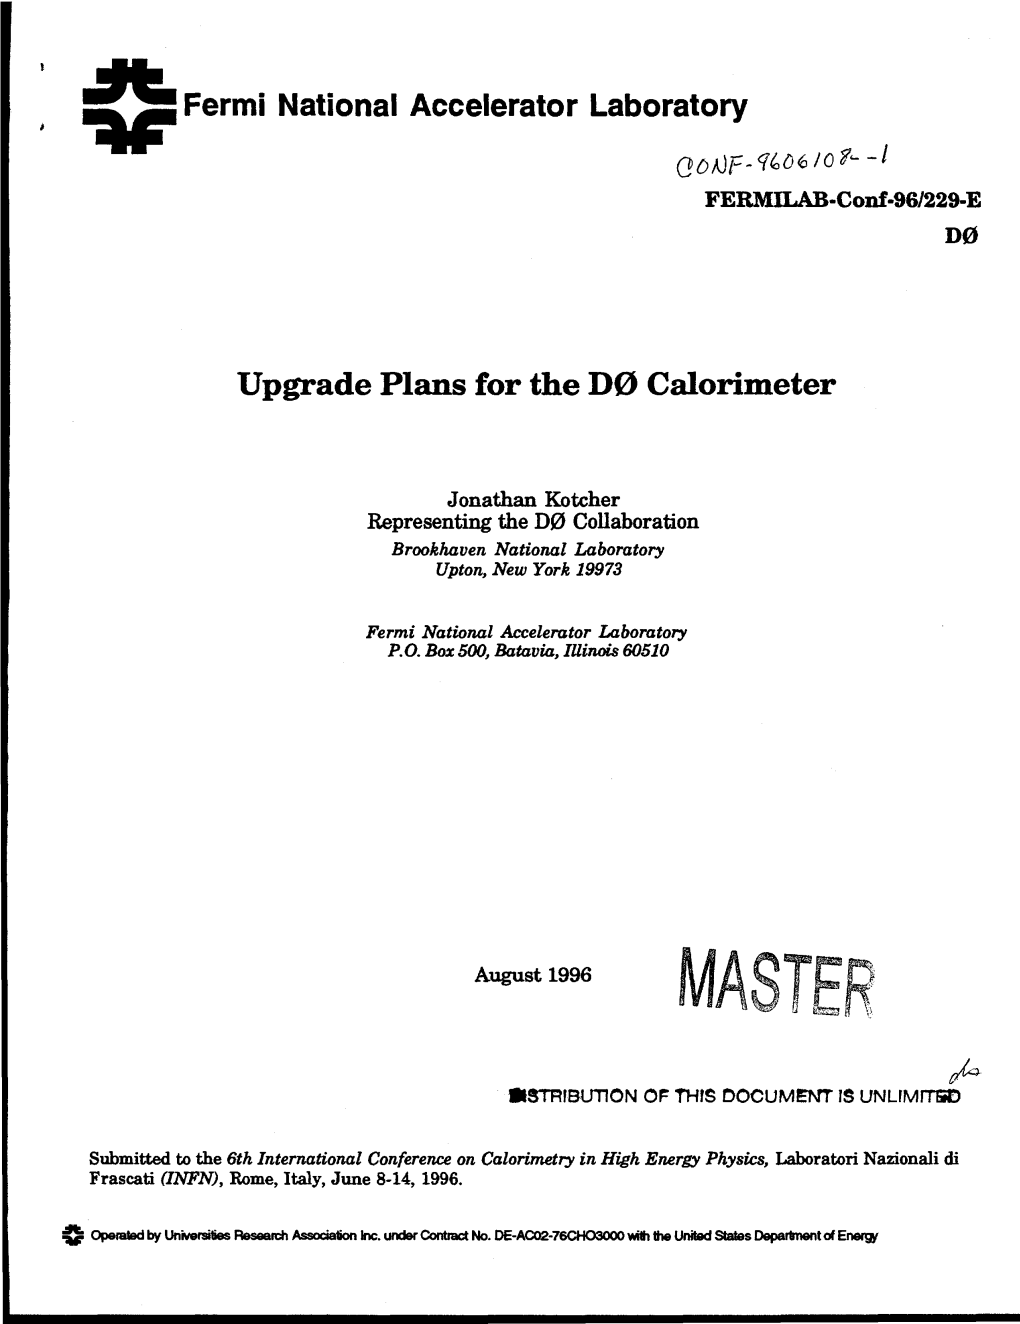 Upgrade Plans for the D0 Calorimeter